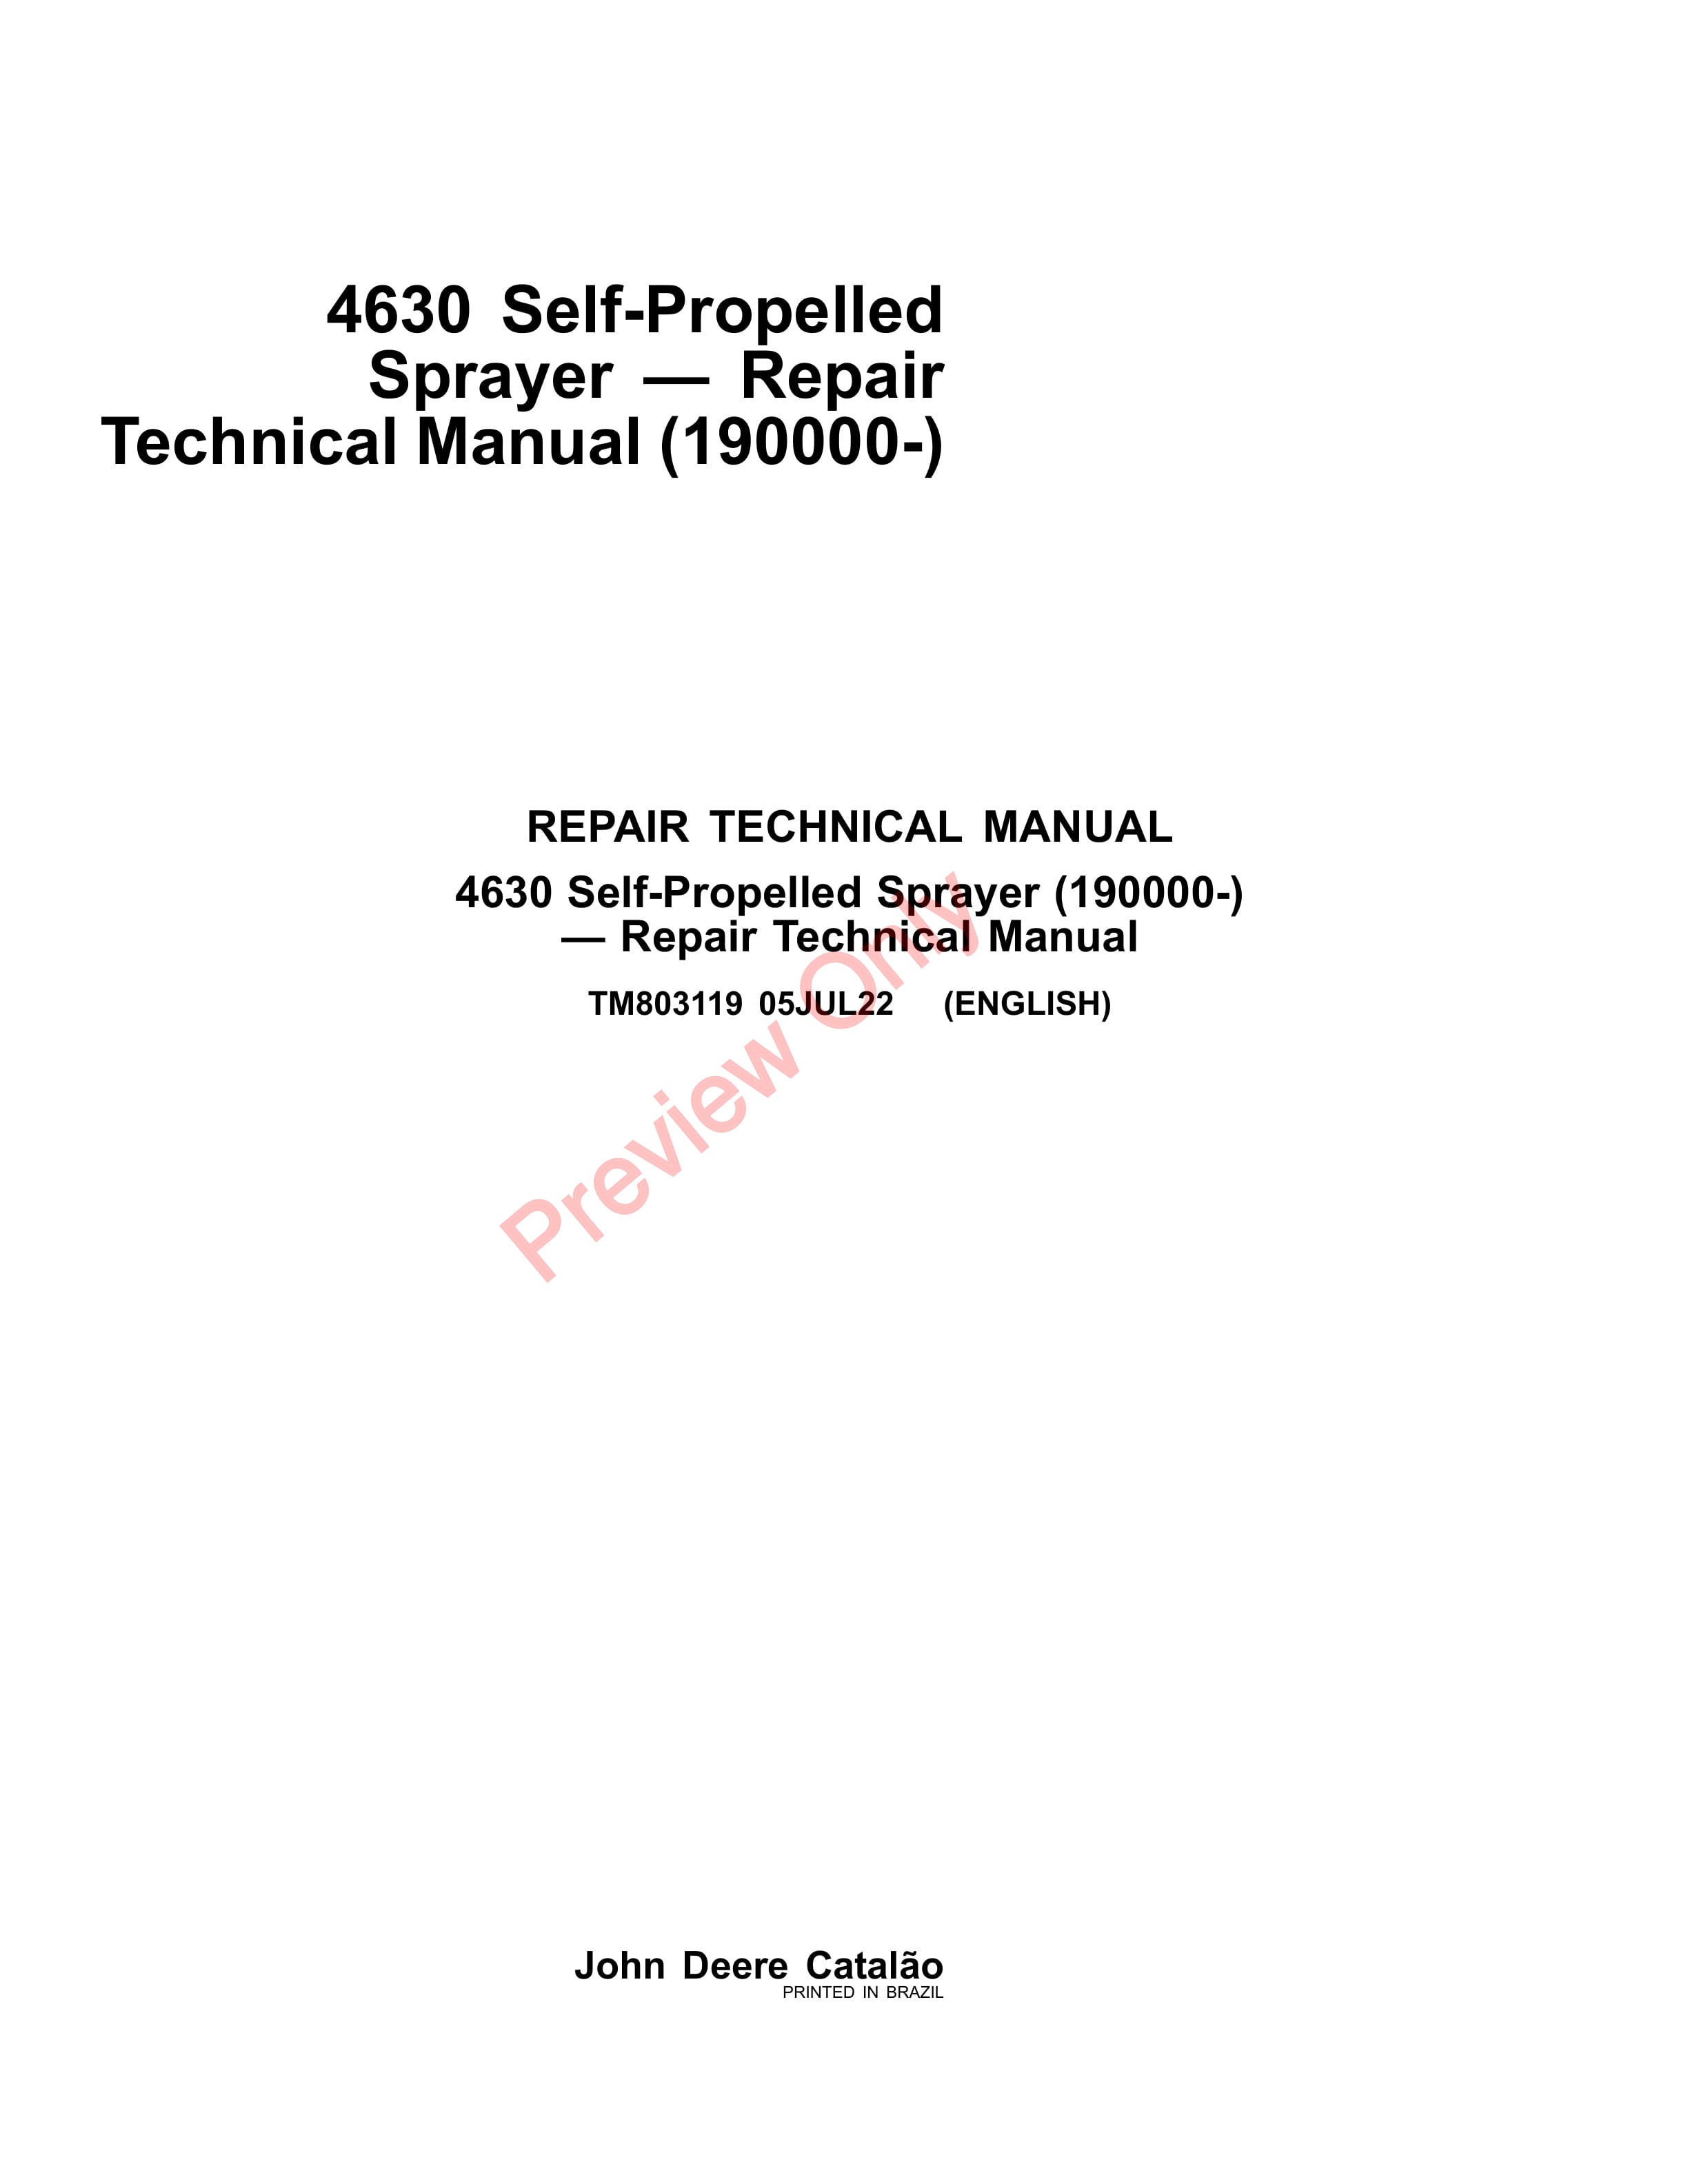 John Deere 4630 Self Propelled Sprayers Repair Technical Manual TM803119 05JUL22 1